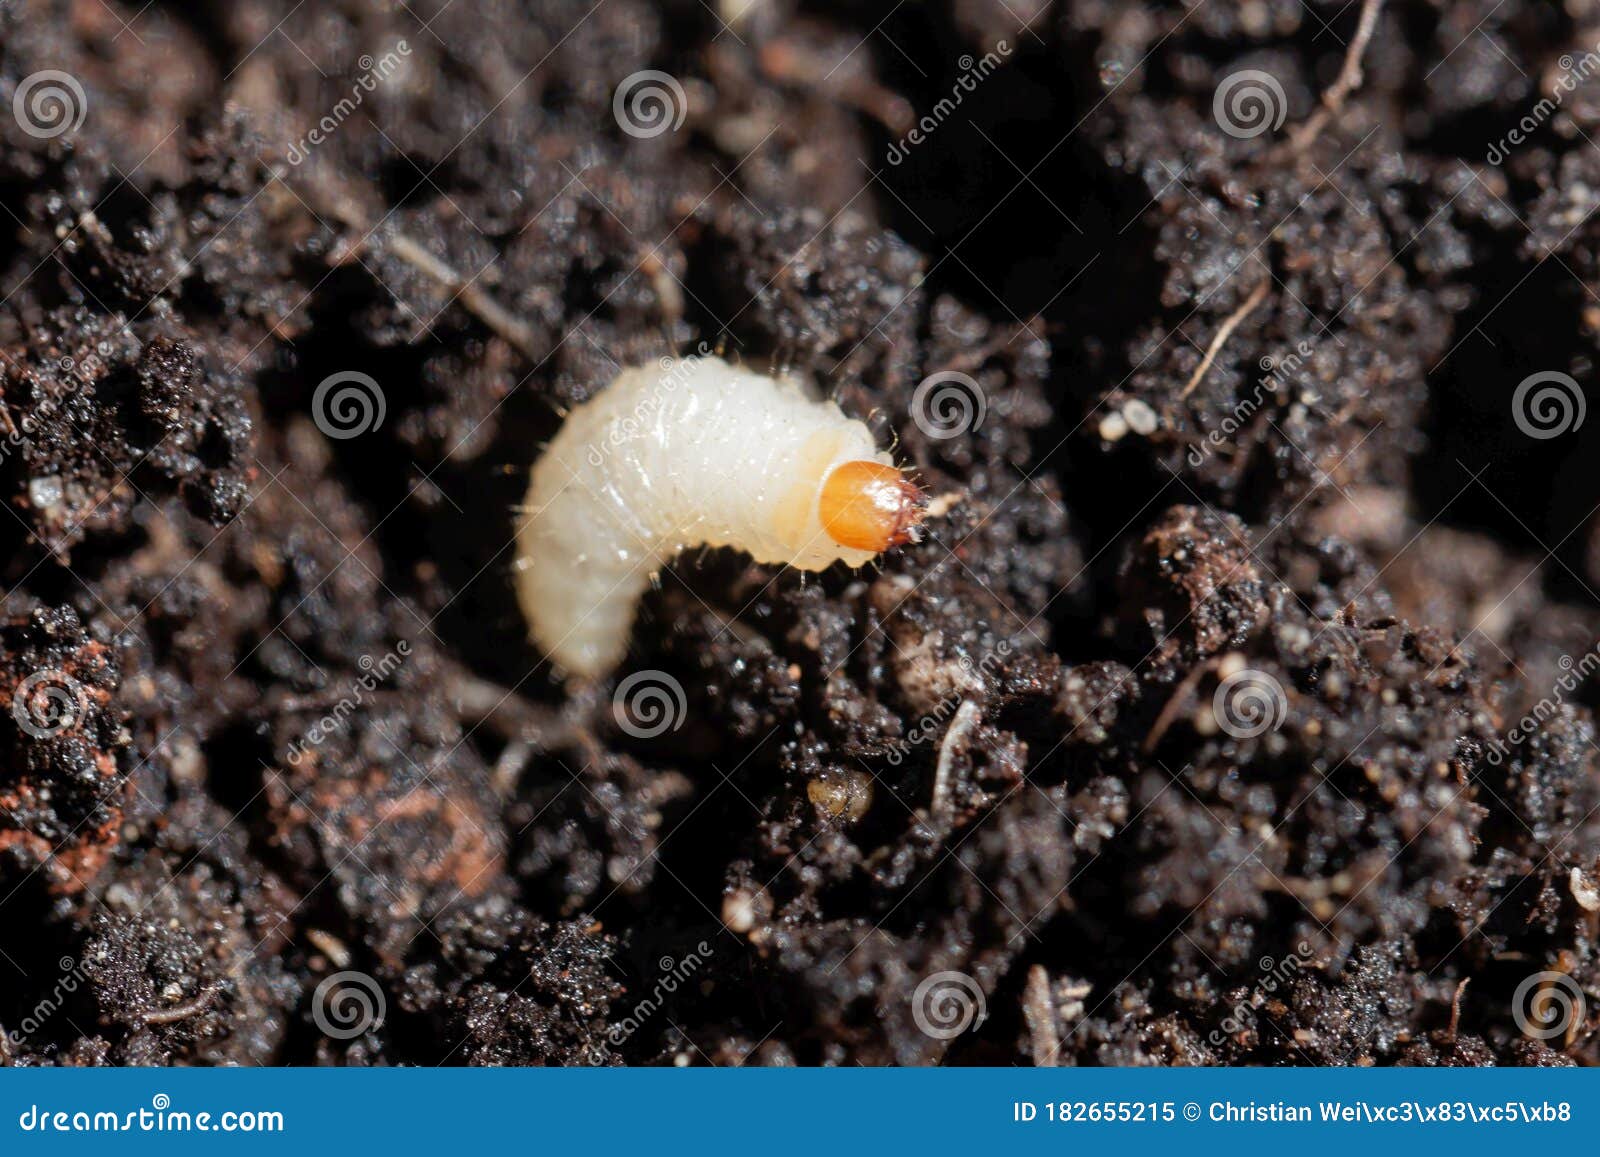 Larva Of A Weevil Bug Otiorhynchus On Garden Soil Stock Image Image Of Insect Danger